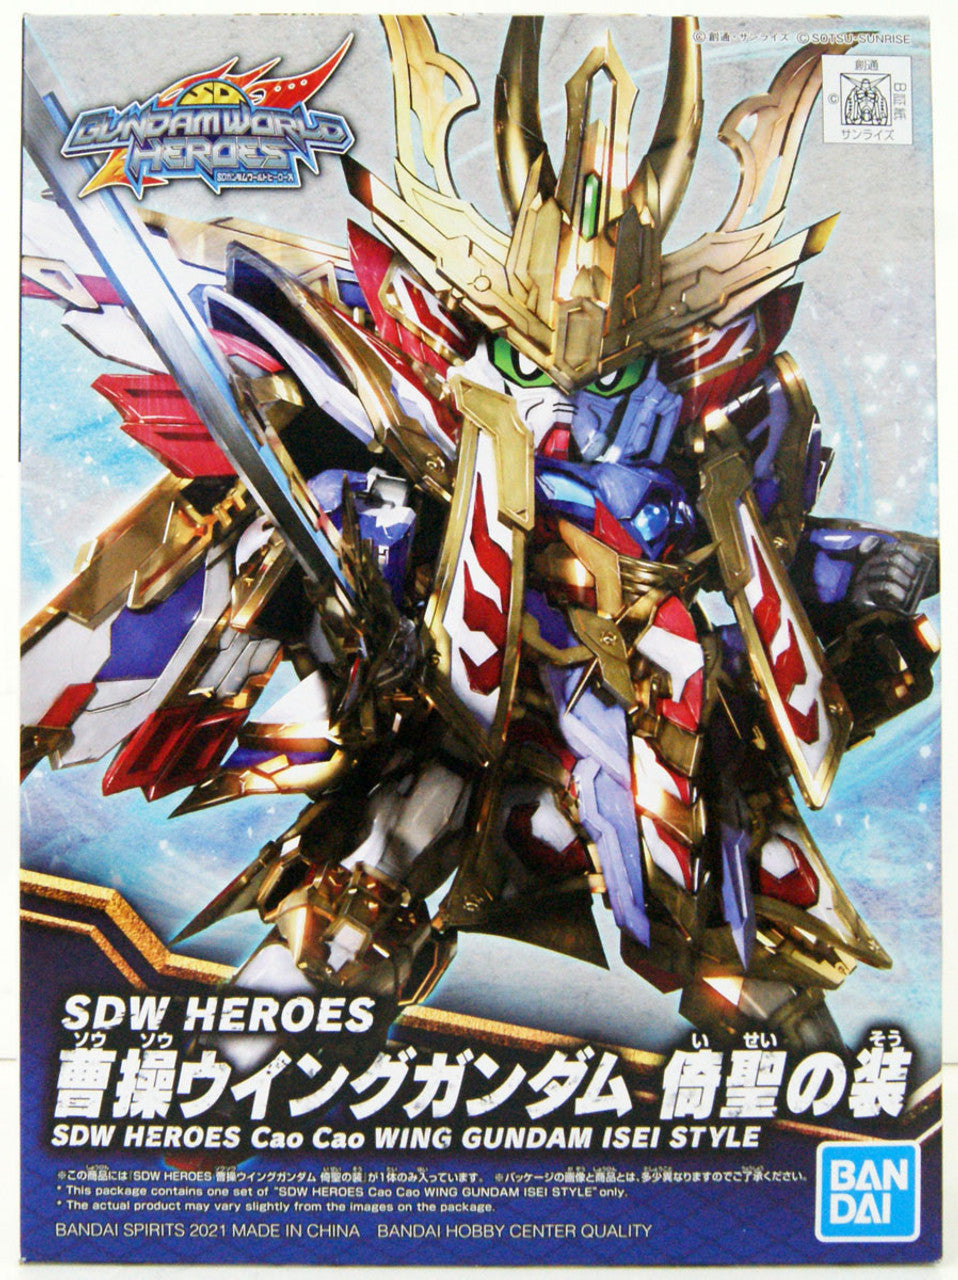 SDW Heroes Cao Cao Wing Gundam Isei Style